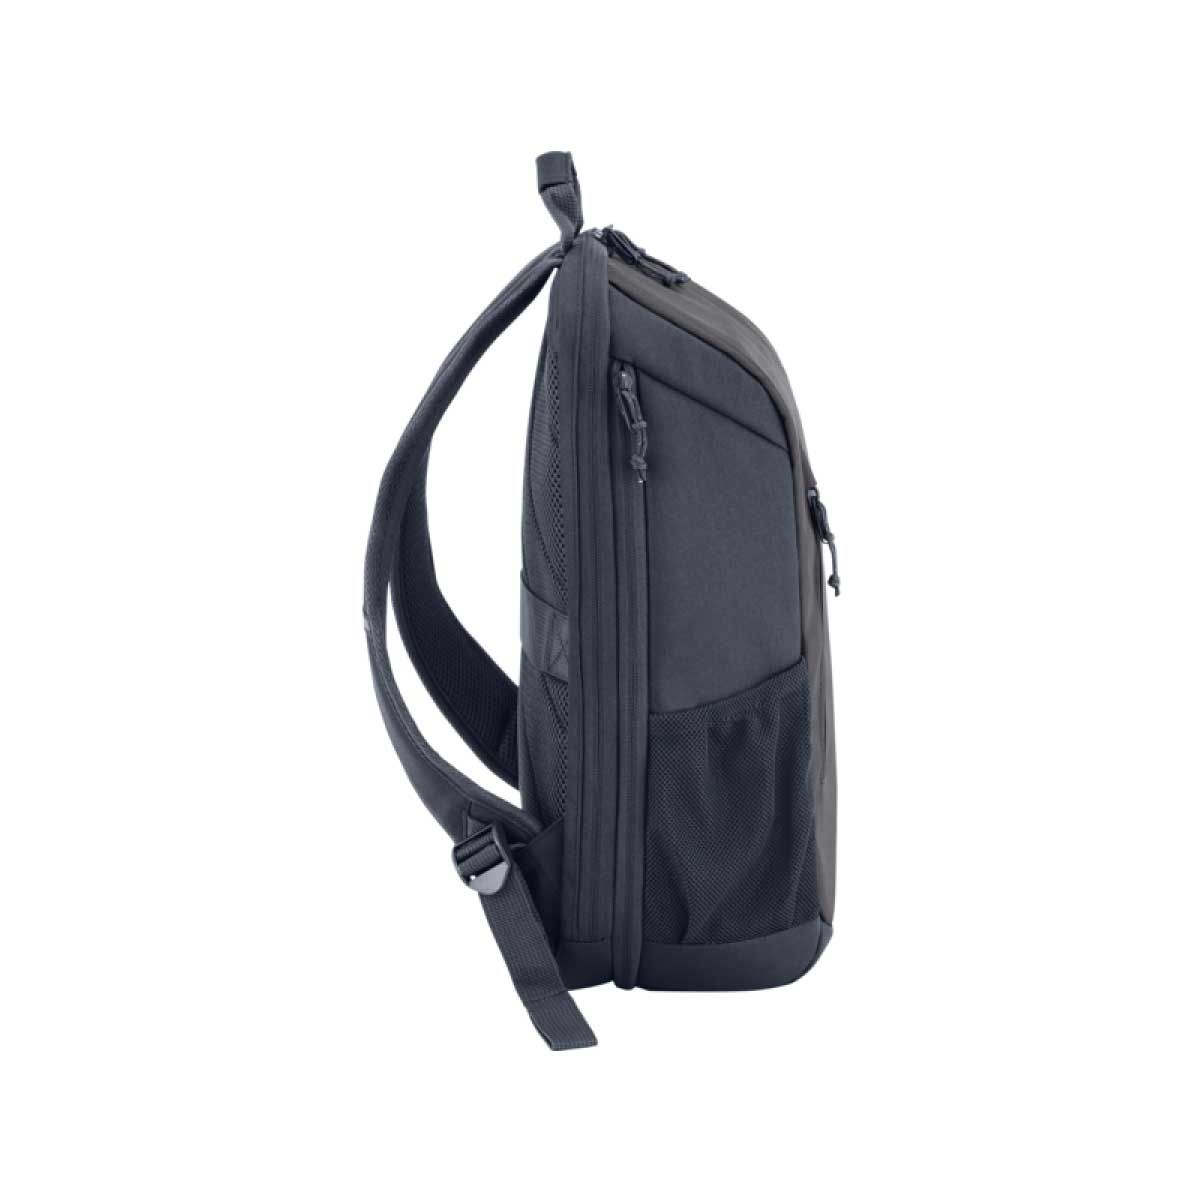 HP Travel 18 Liter 15.6 Iron Grey Laptop Backpack (6B8U6AA)